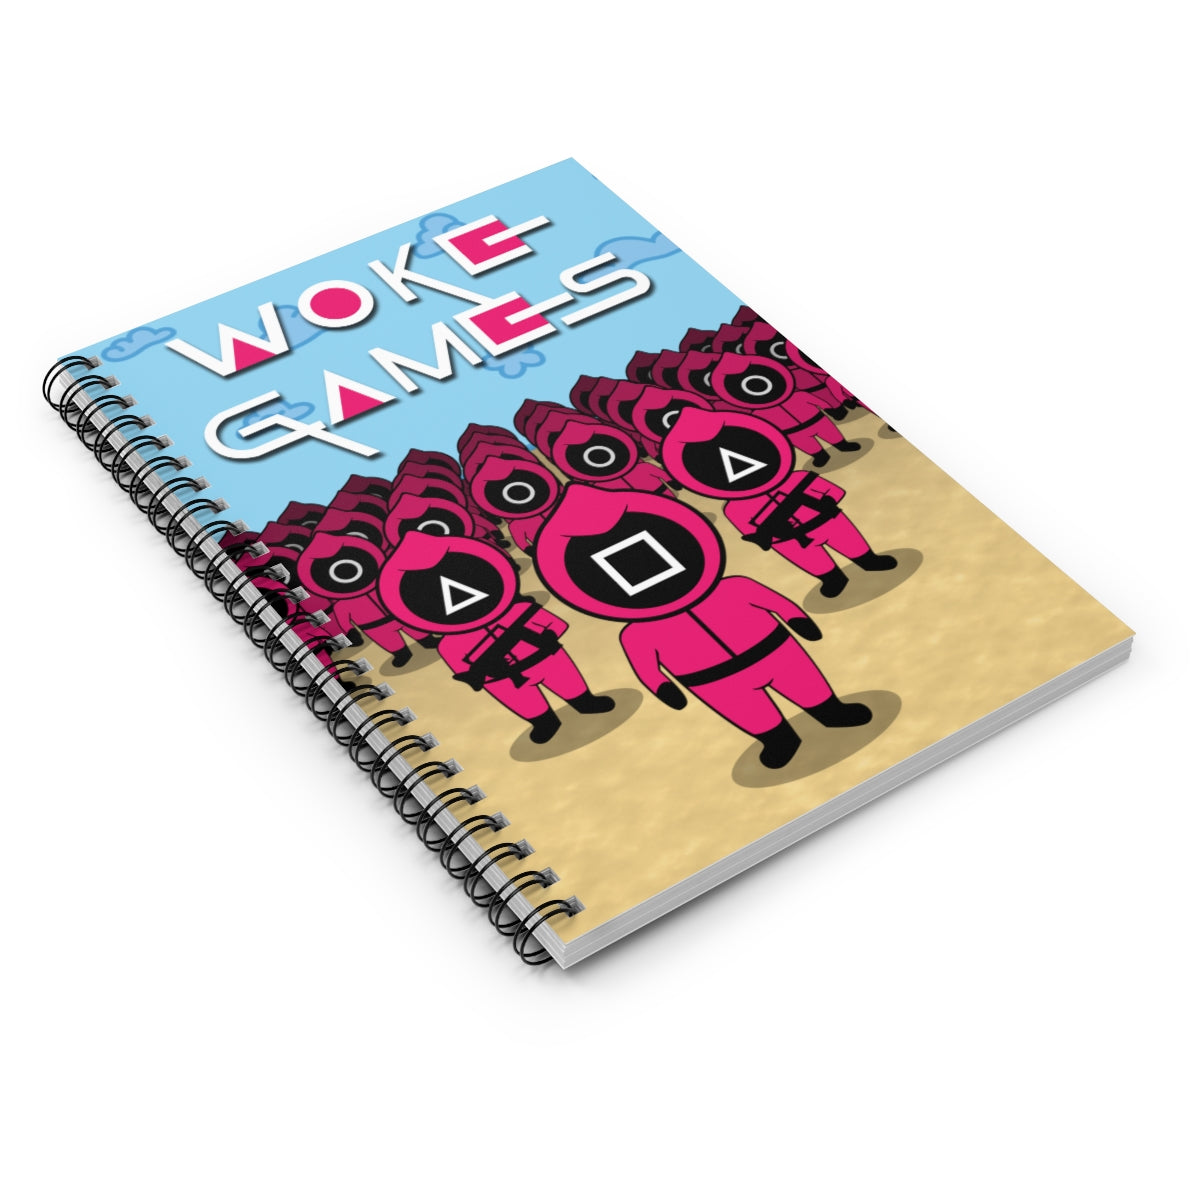 Play Woke Games Utility Notebook Evil Laboratory